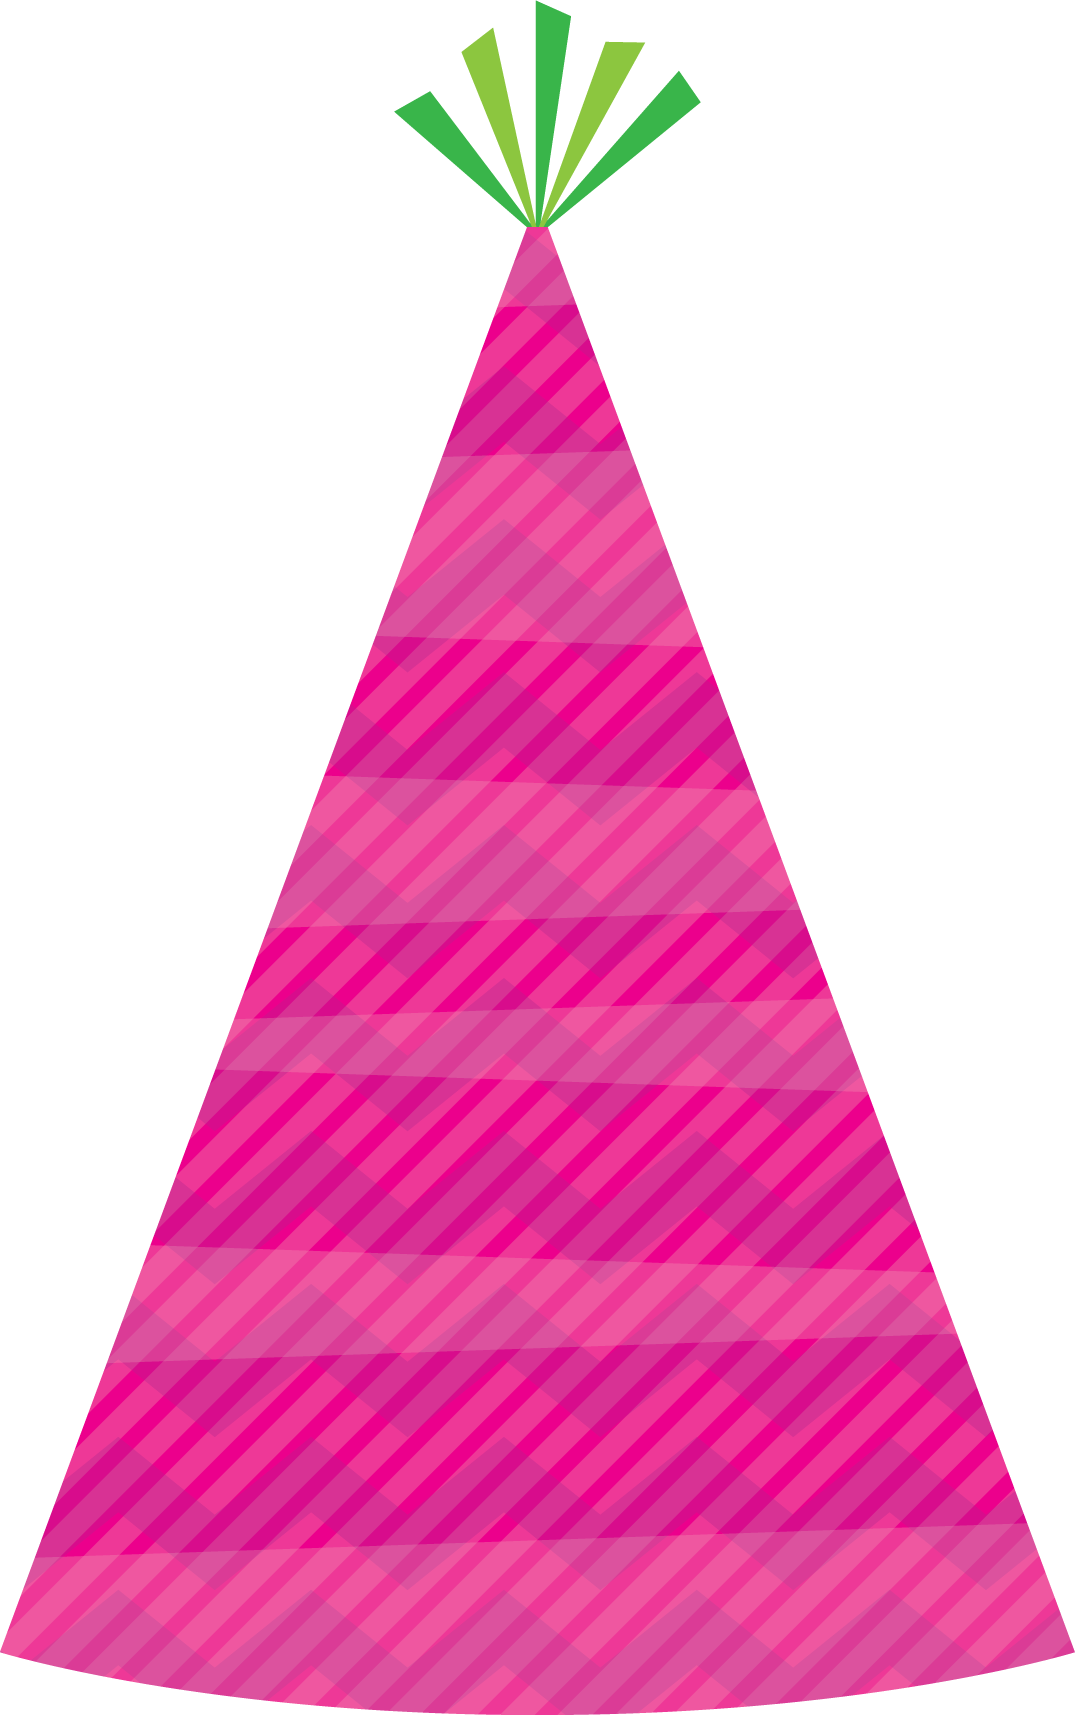 Aniversário colorido chapéu PNG clipart fundo